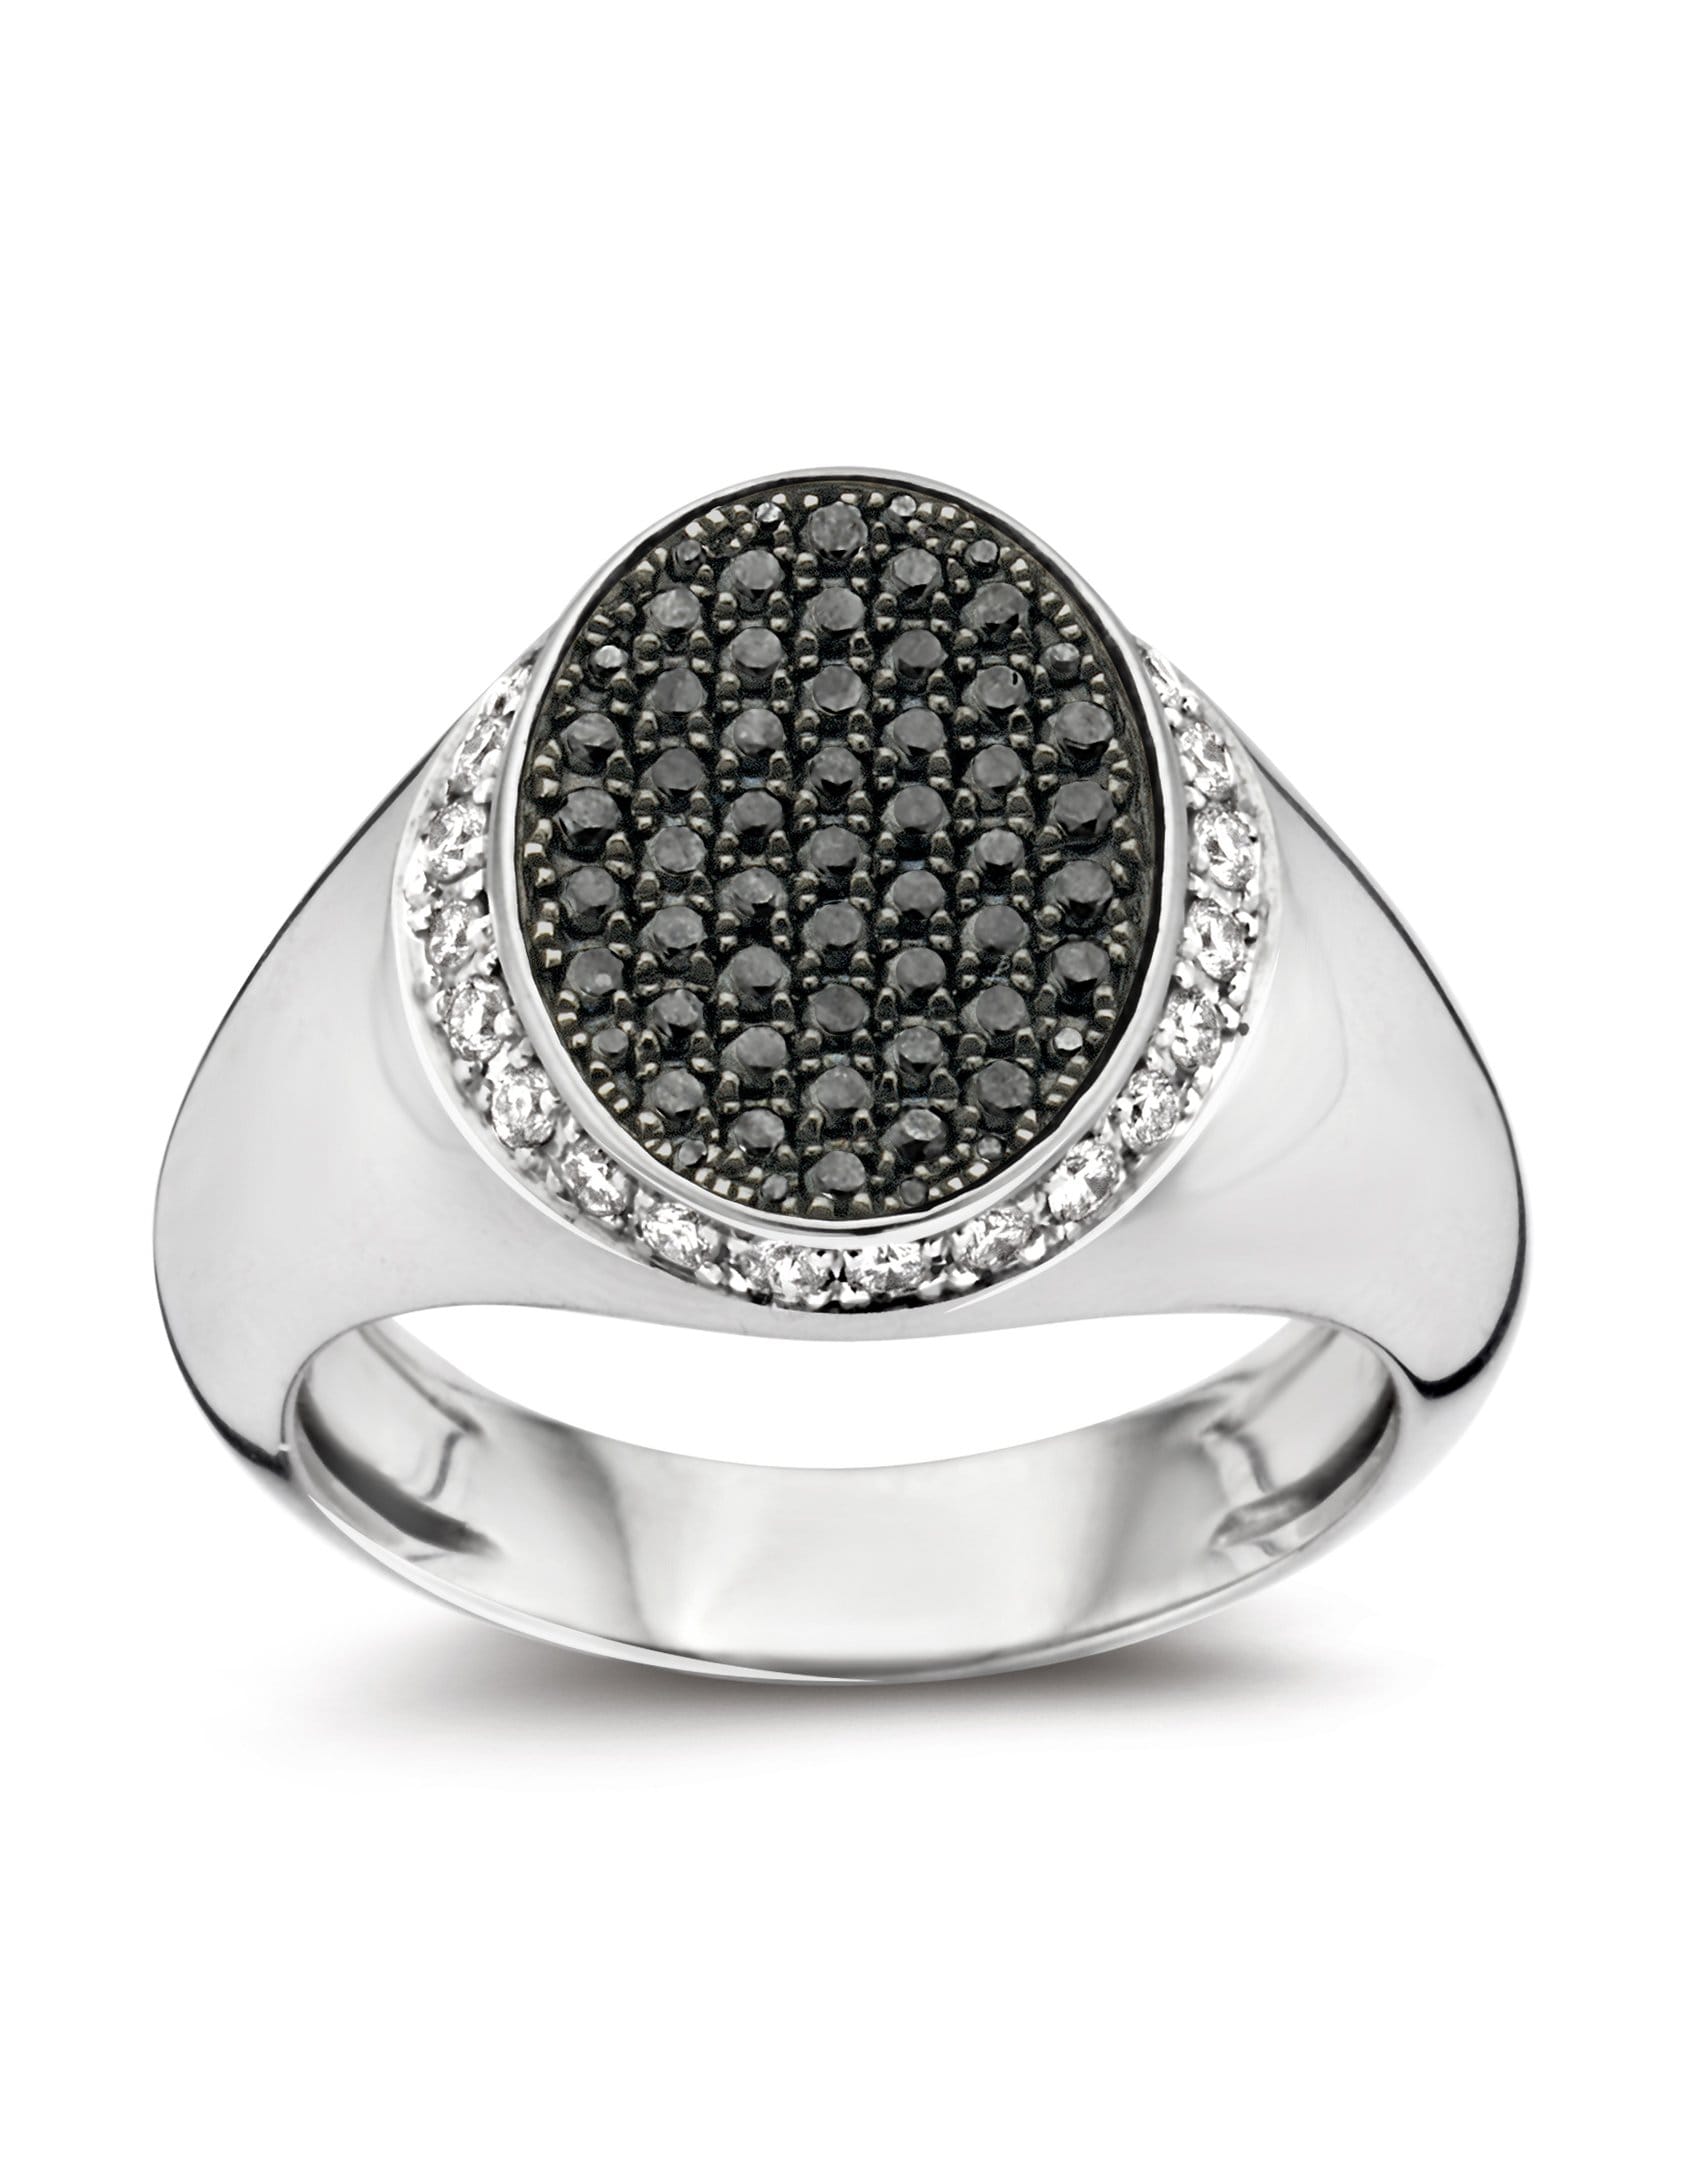 DRIES CRIEL-Classic Black & White Diamond SIGNET Ring-7